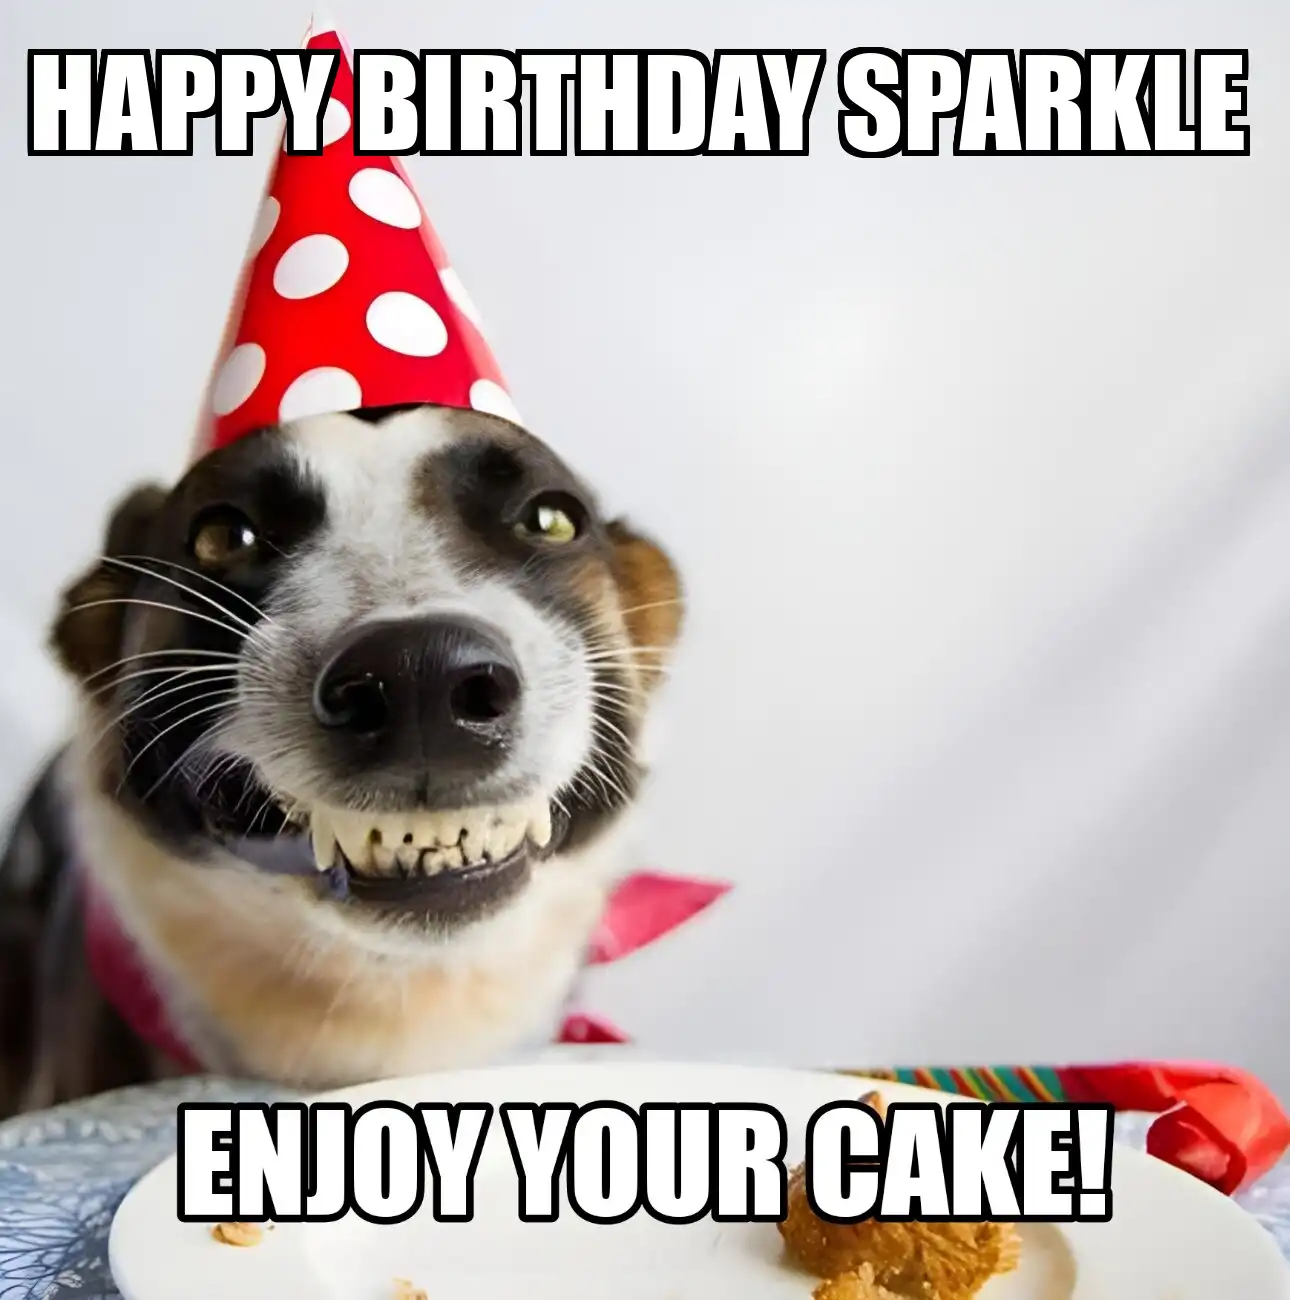 Happy Birthday Sparkle Enjoy Your Cake Dog Meme